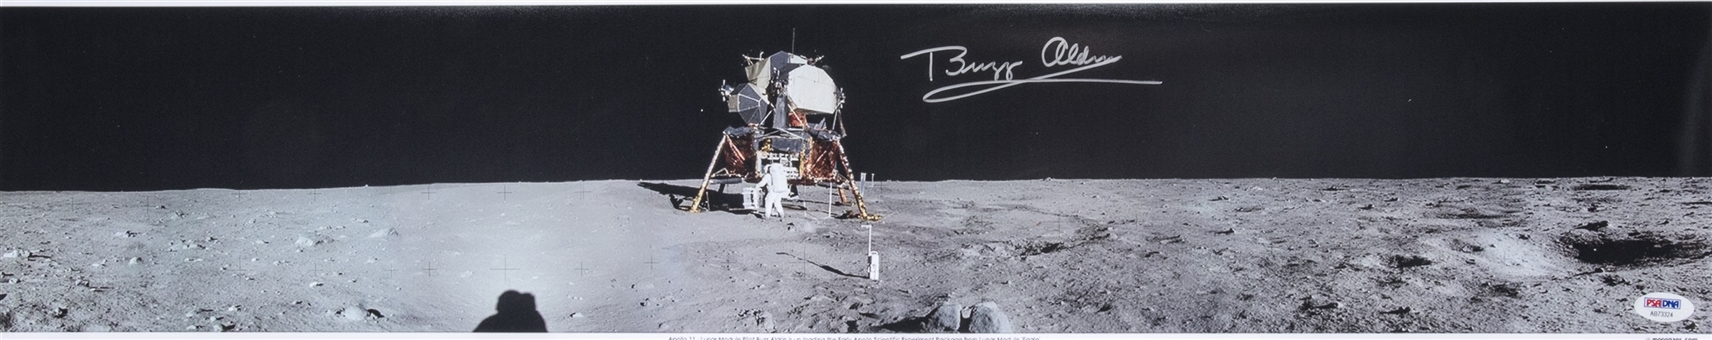 Buzz Aldrin Autographed 6 x 30 Panoramic Moon Photograph (PSA/DNA)